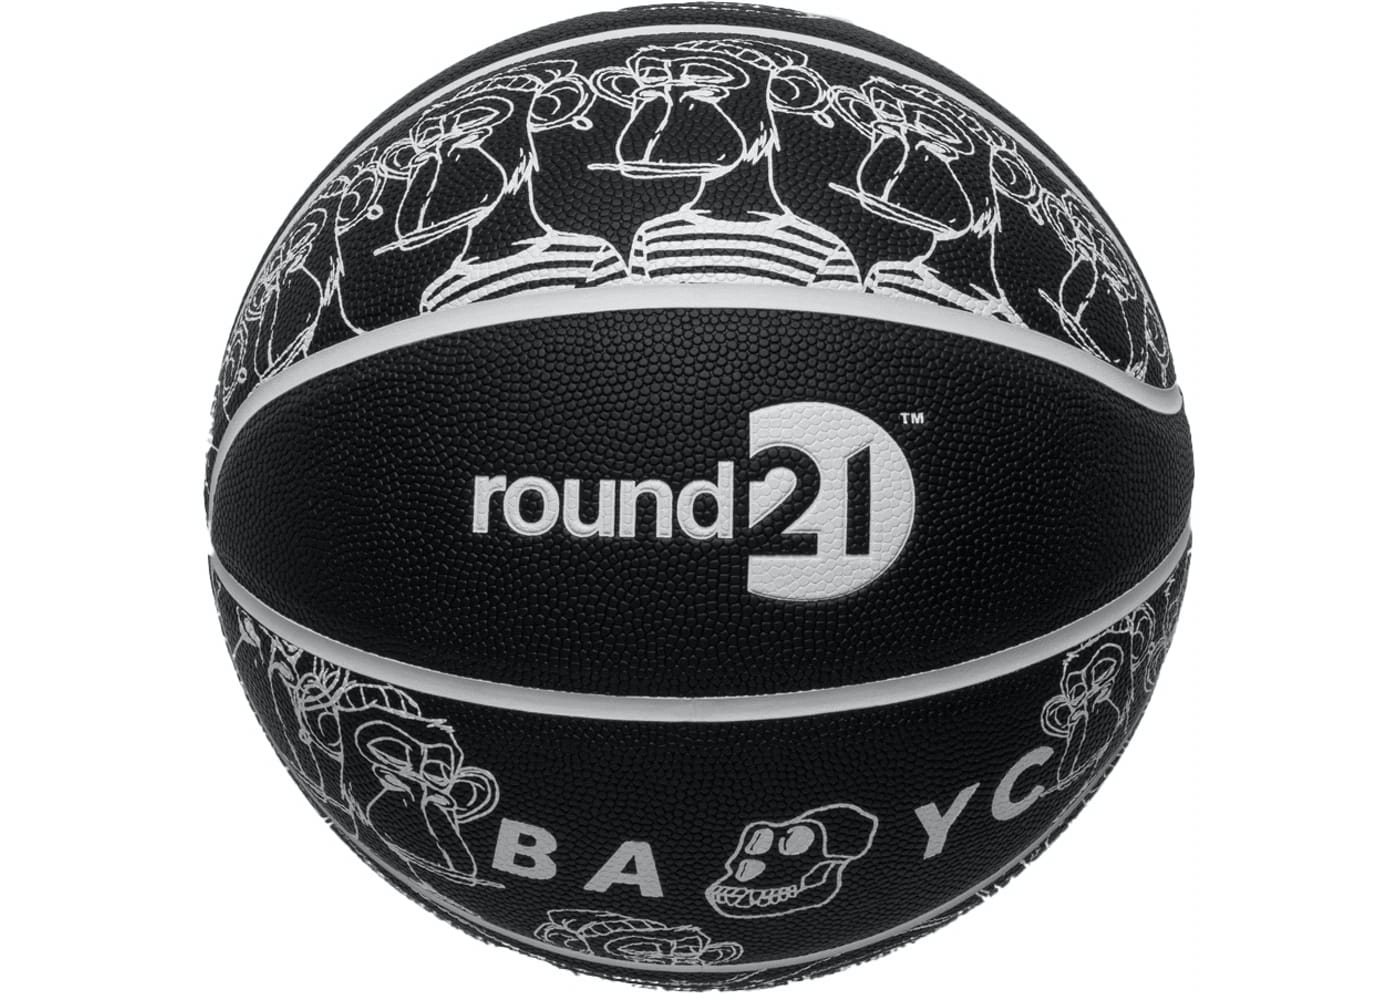 Round21 x Bored Ape Yacht Club Basketball